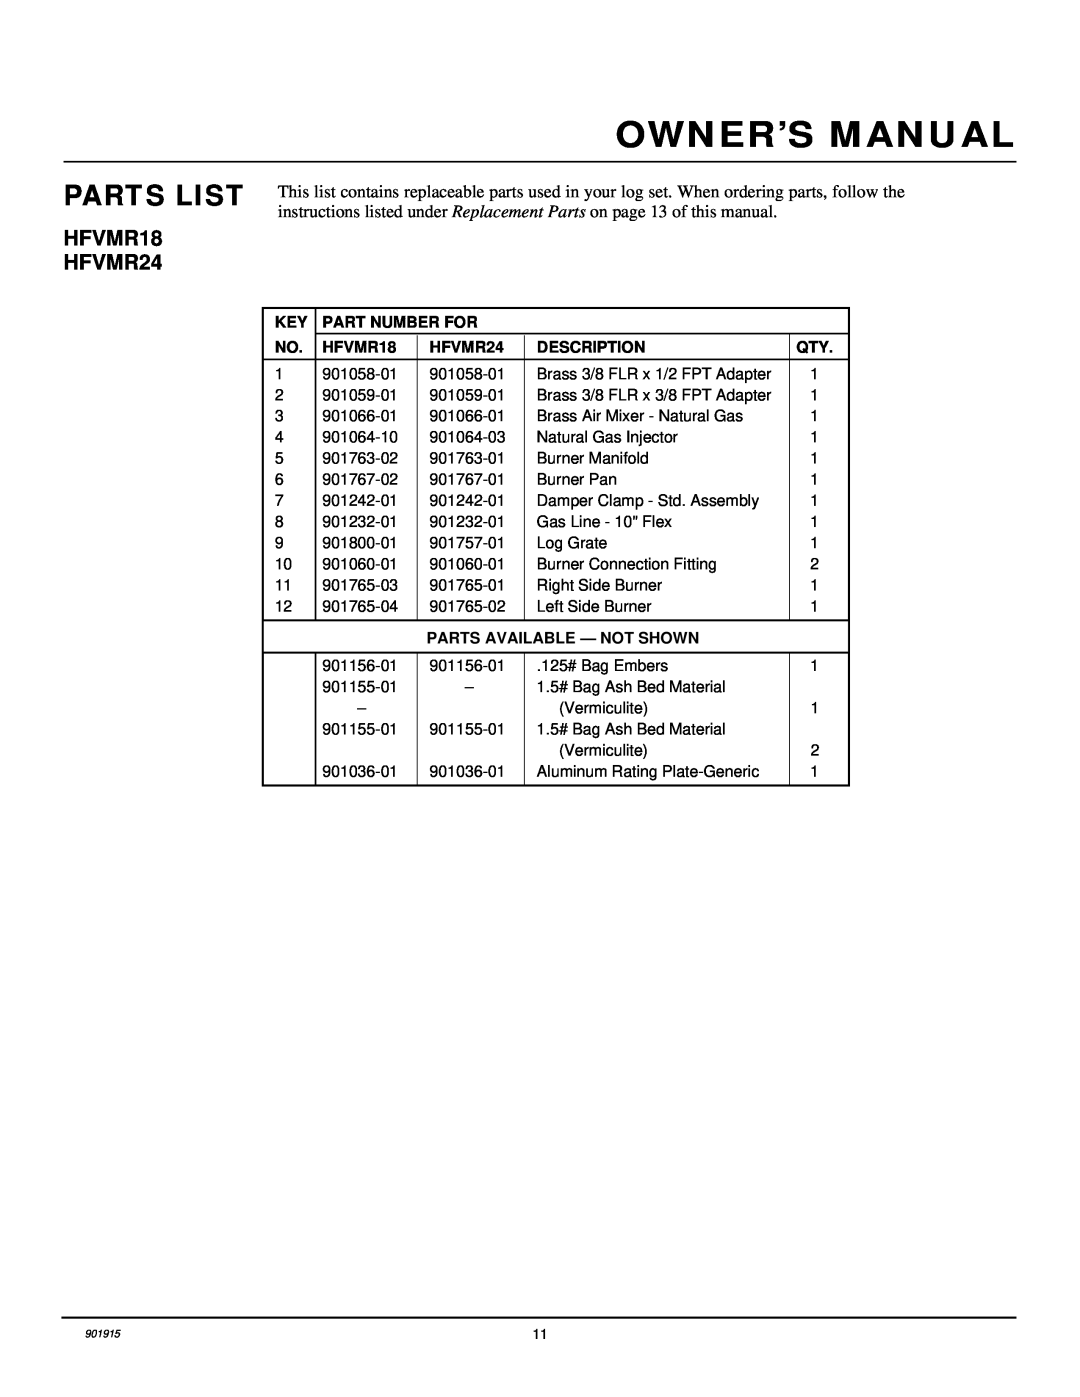 Desa HFVMR24 installation manual Parts List, Part Number For, HFVMR18, Description, Parts Available - Not Shown 